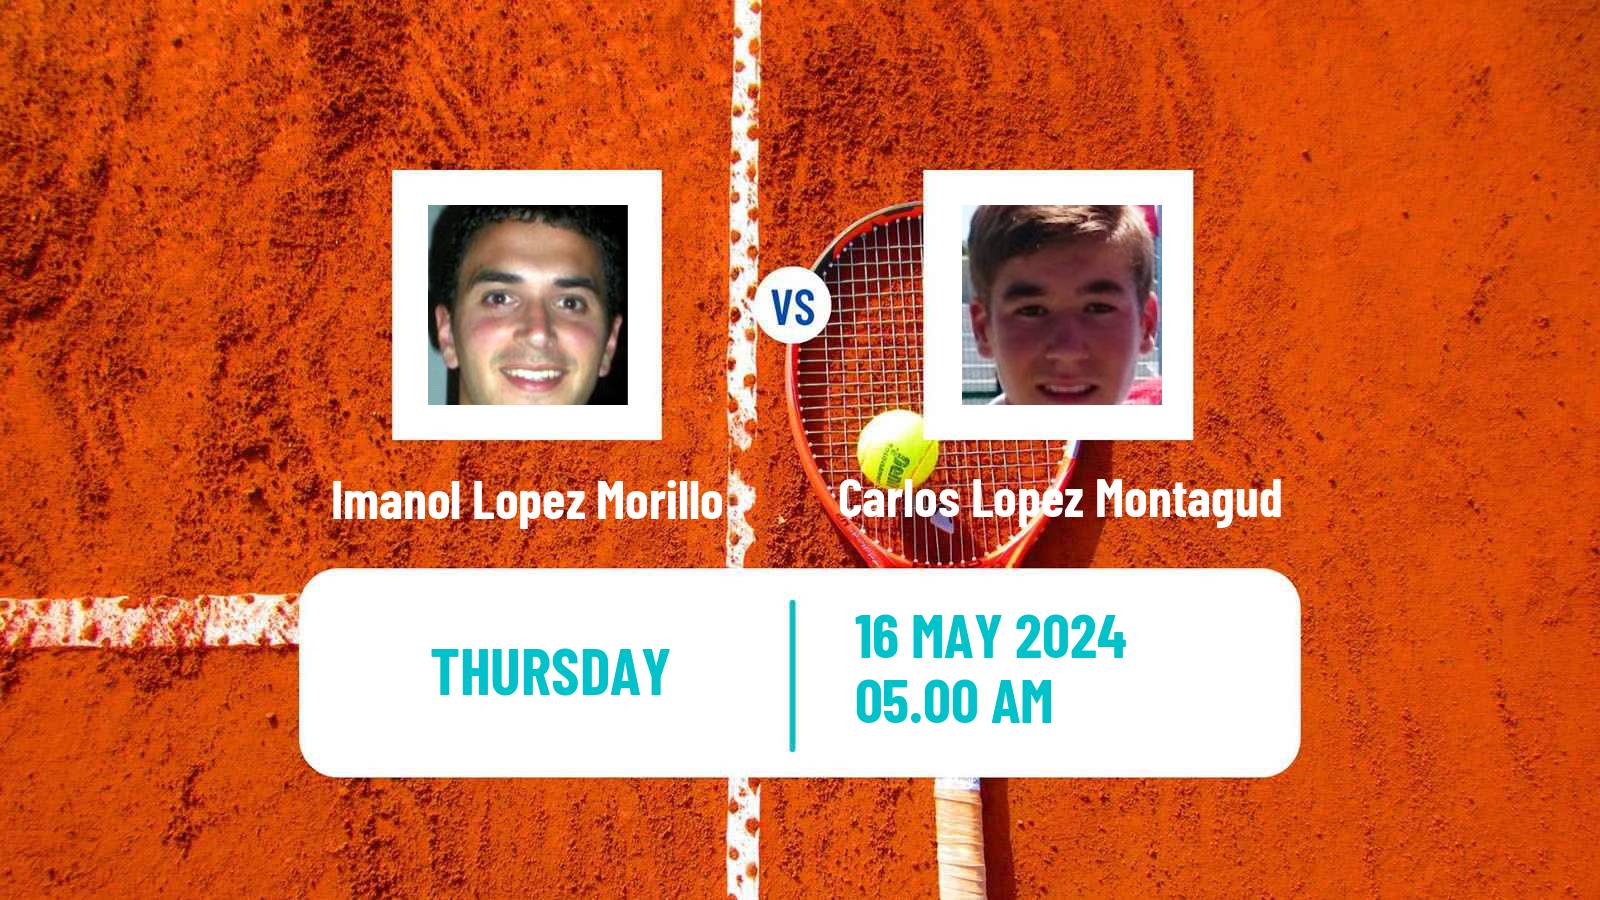 Tennis ITF M25 Vic Men Imanol Lopez Morillo - Carlos Lopez Montagud